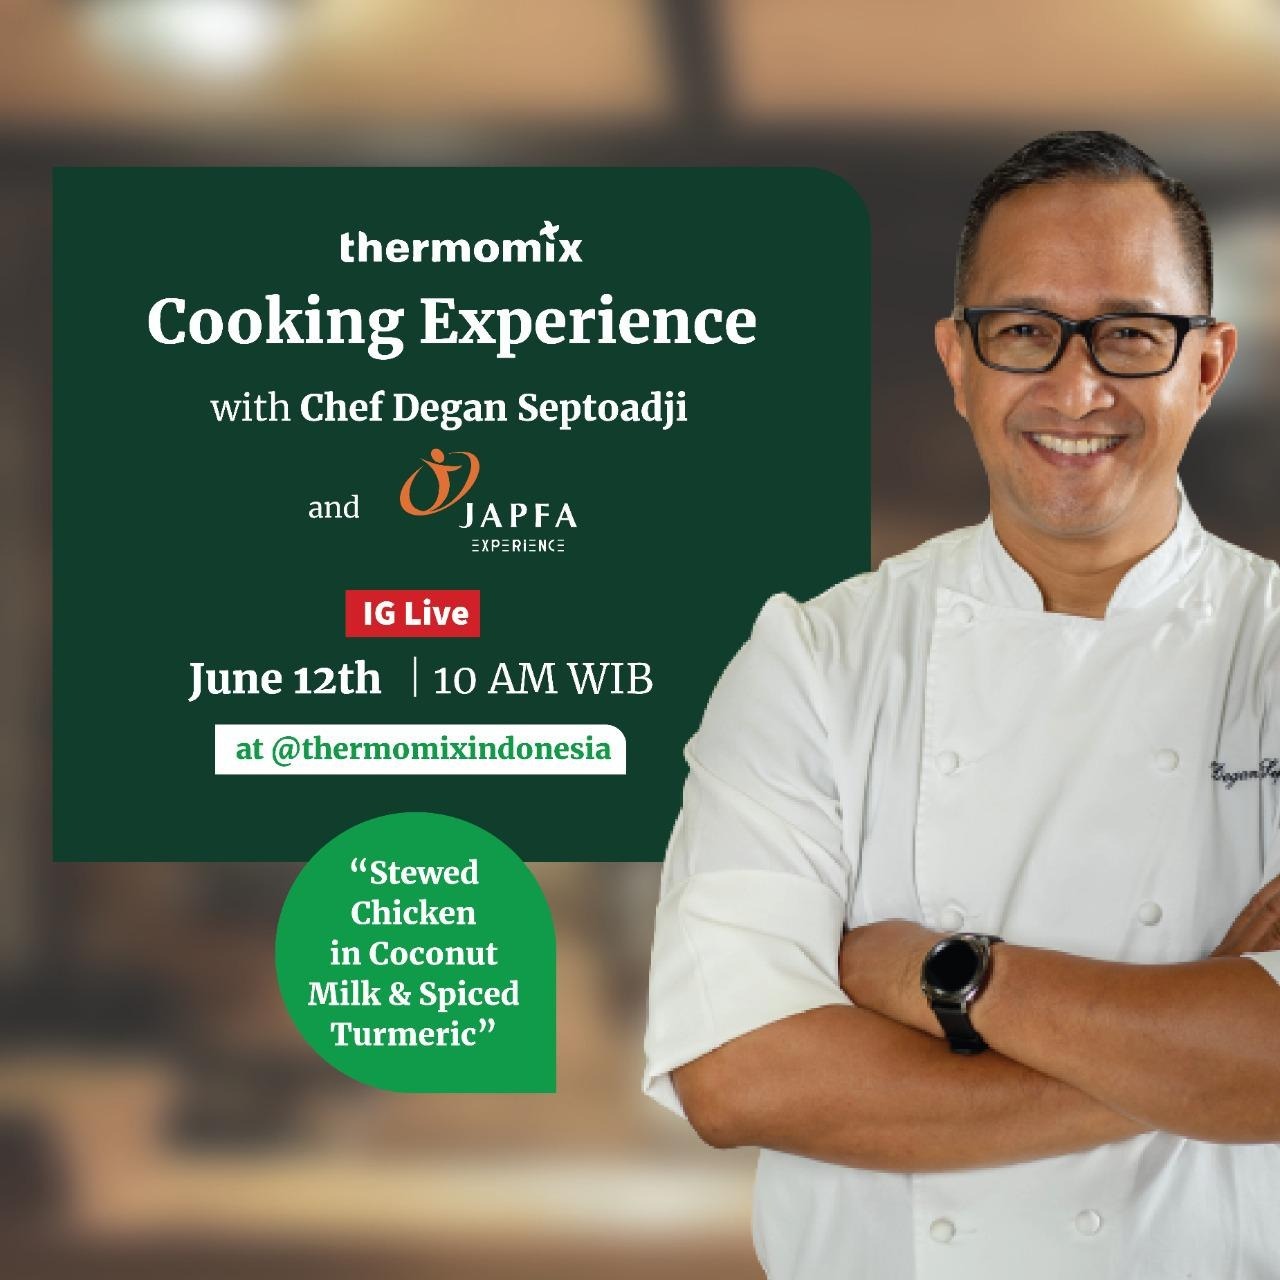 Nikmati Sabtu Pagi bersama Chef Degan Septoadji @thermomixindonesia IG LIVE!